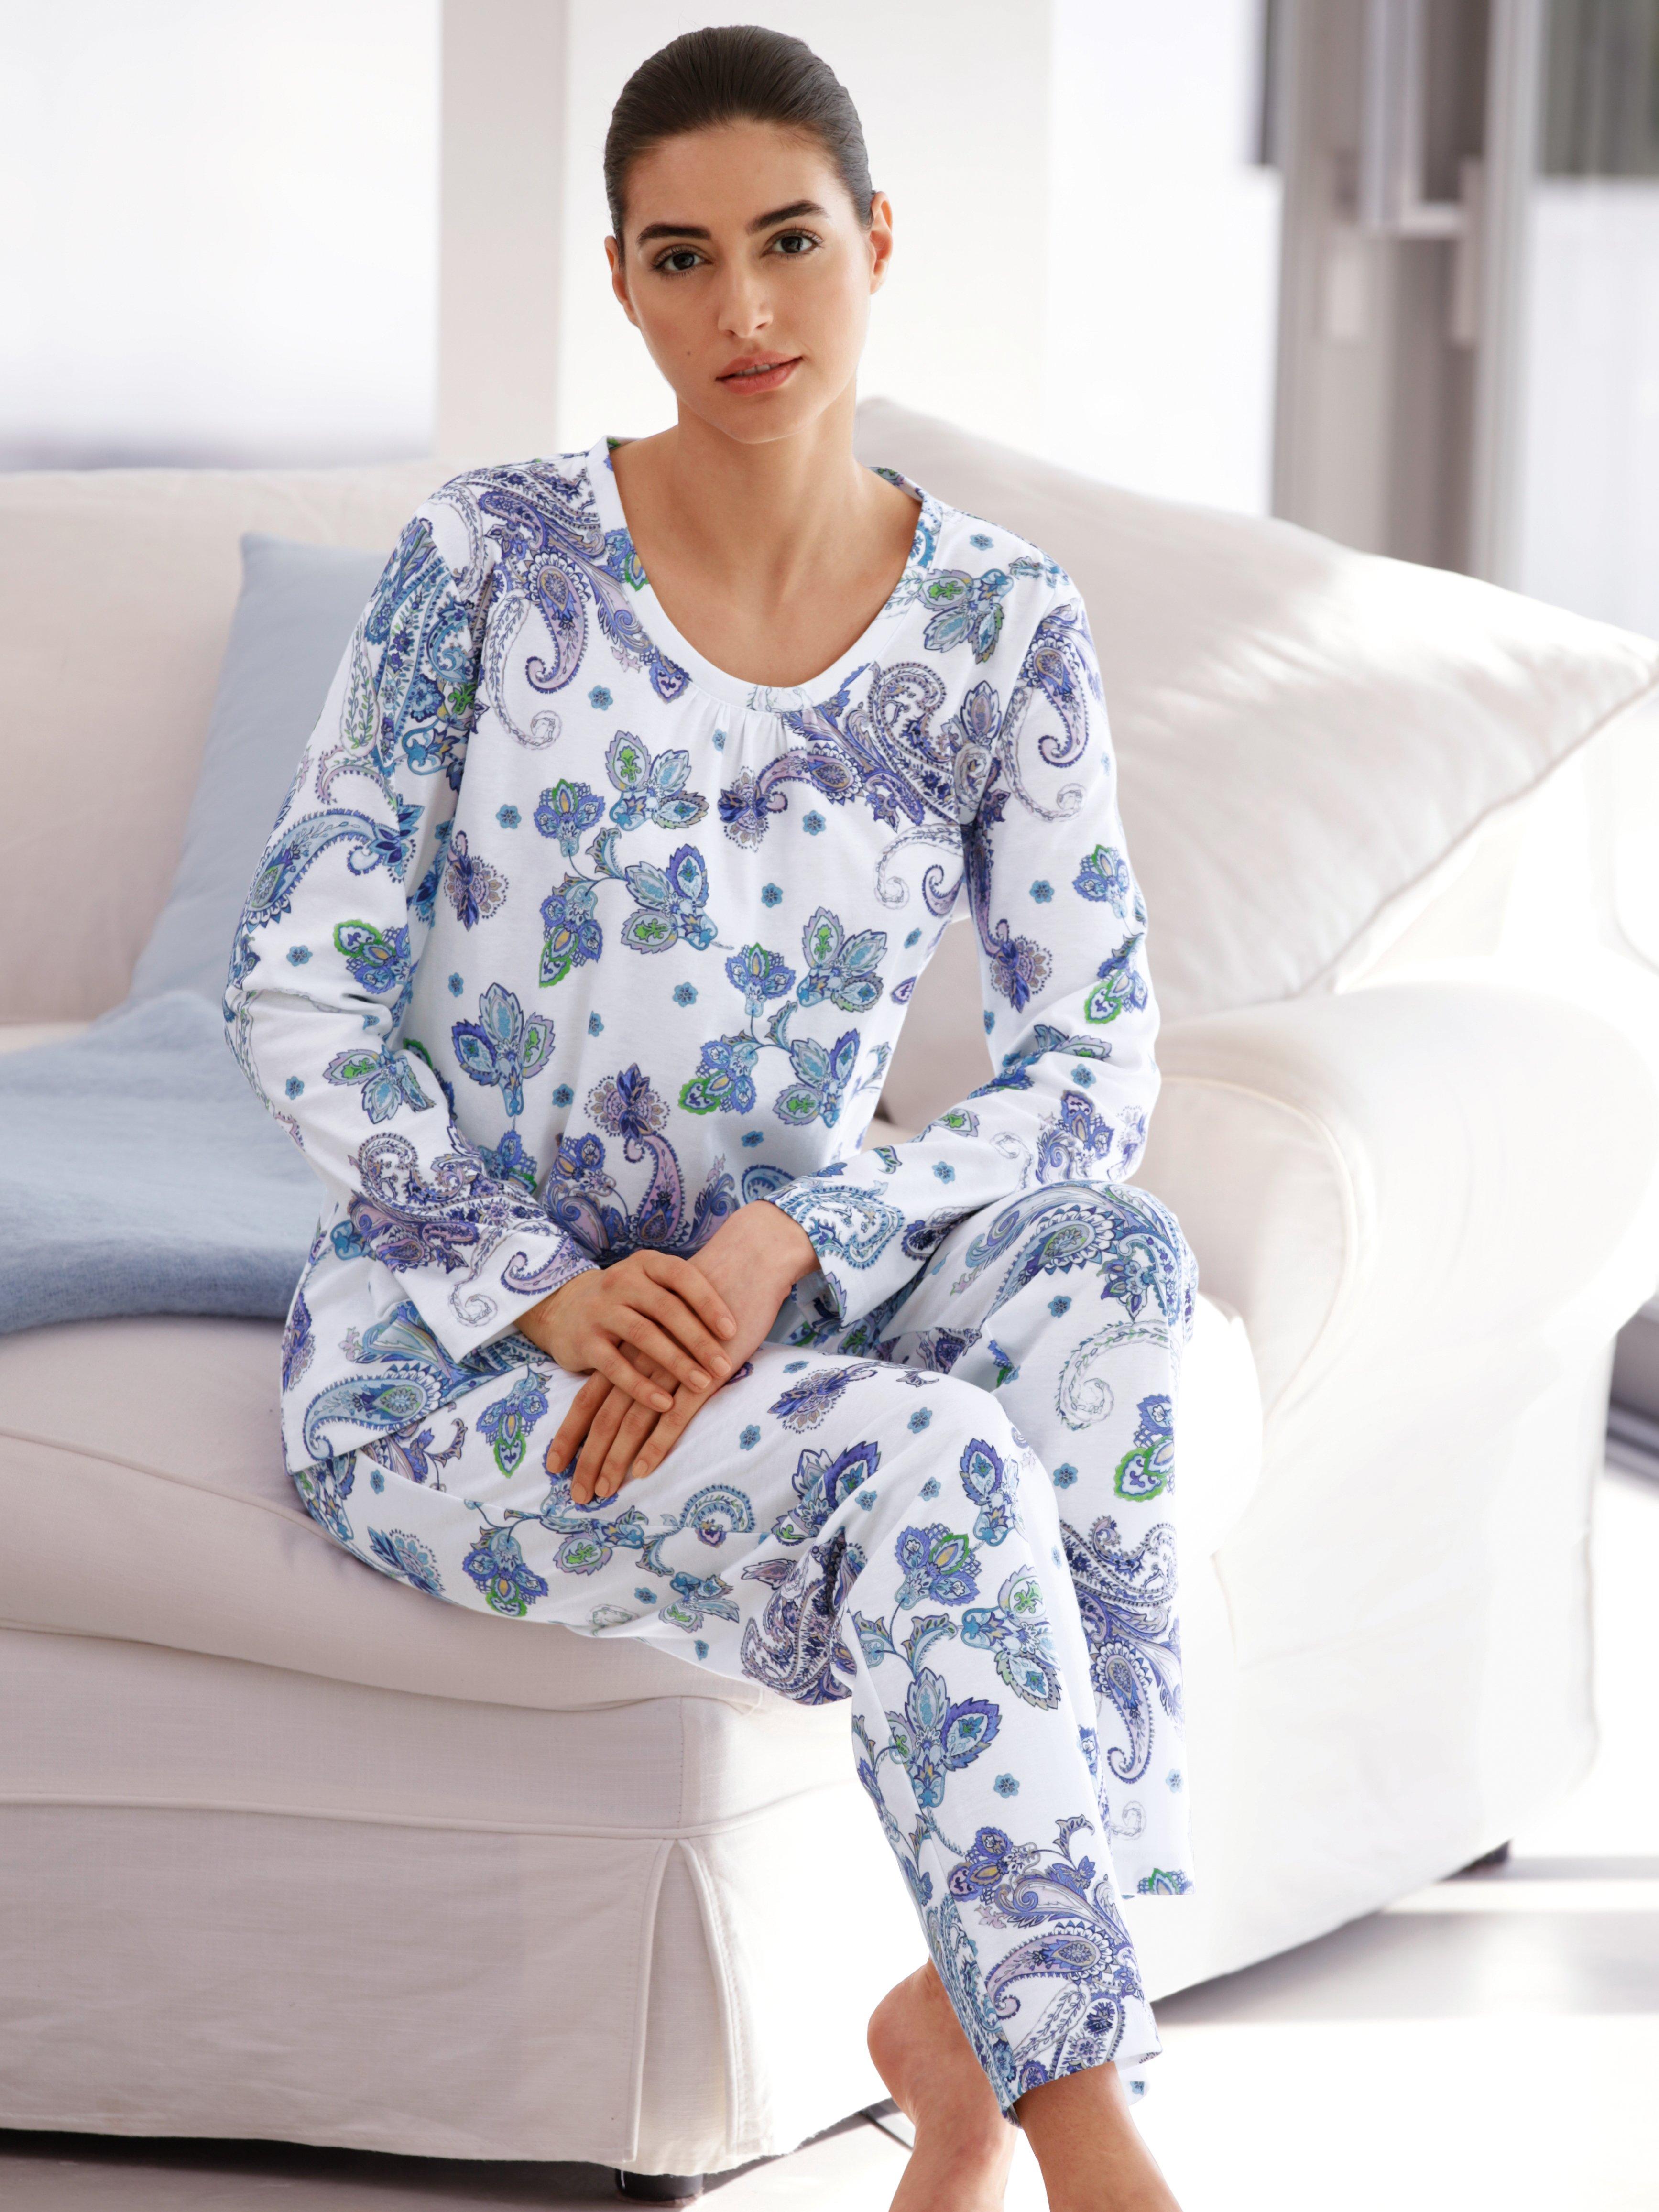 Fürstenberg - Le pyjama 100% coton